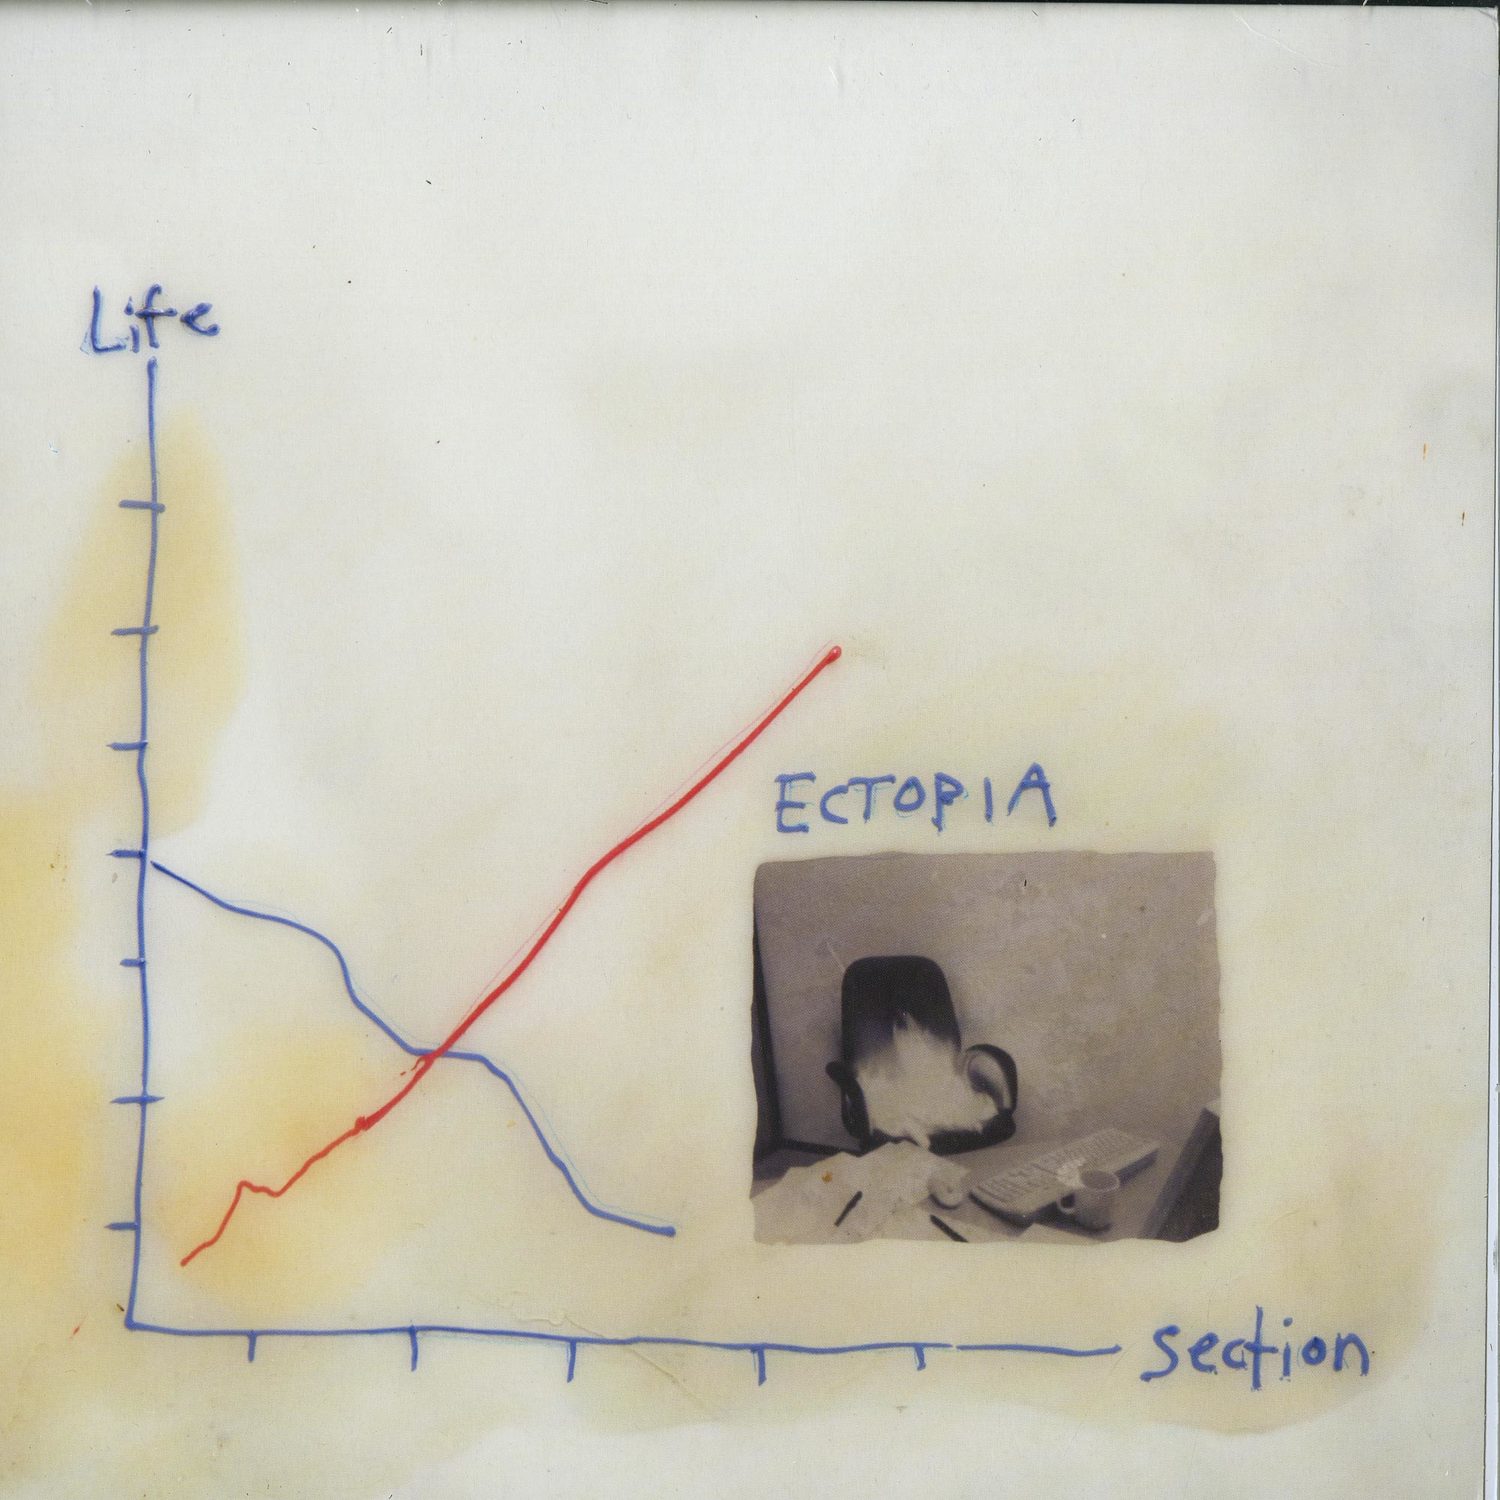 Ectopia - LIFE / SECTION